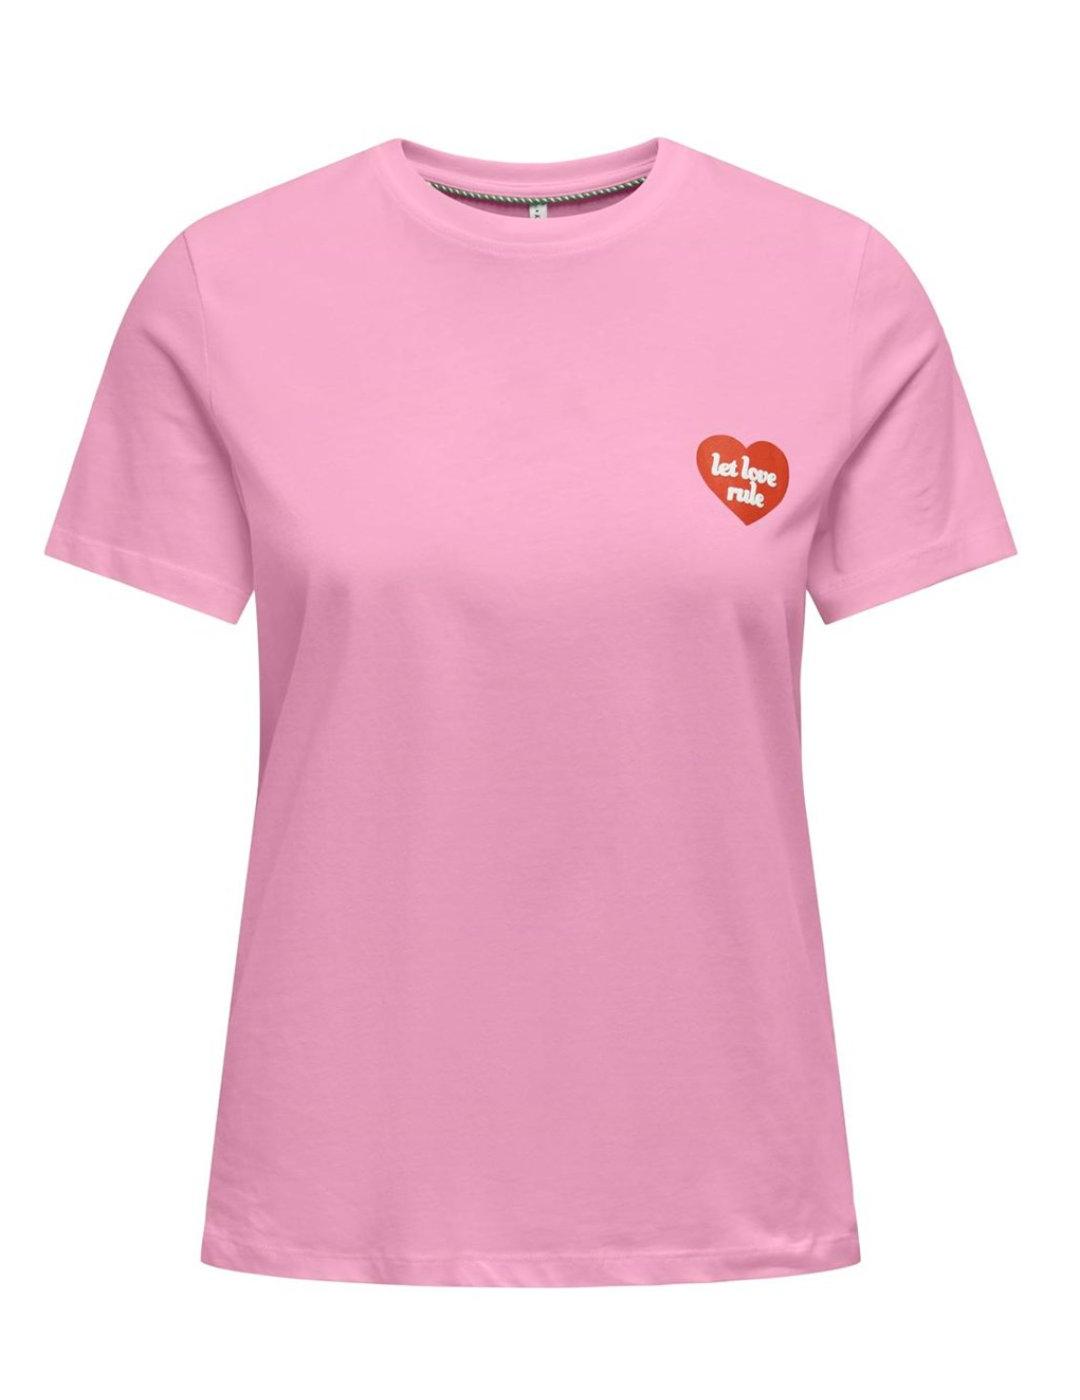 Camiseta Only Senna rosa fucsia de manga corta para mujer